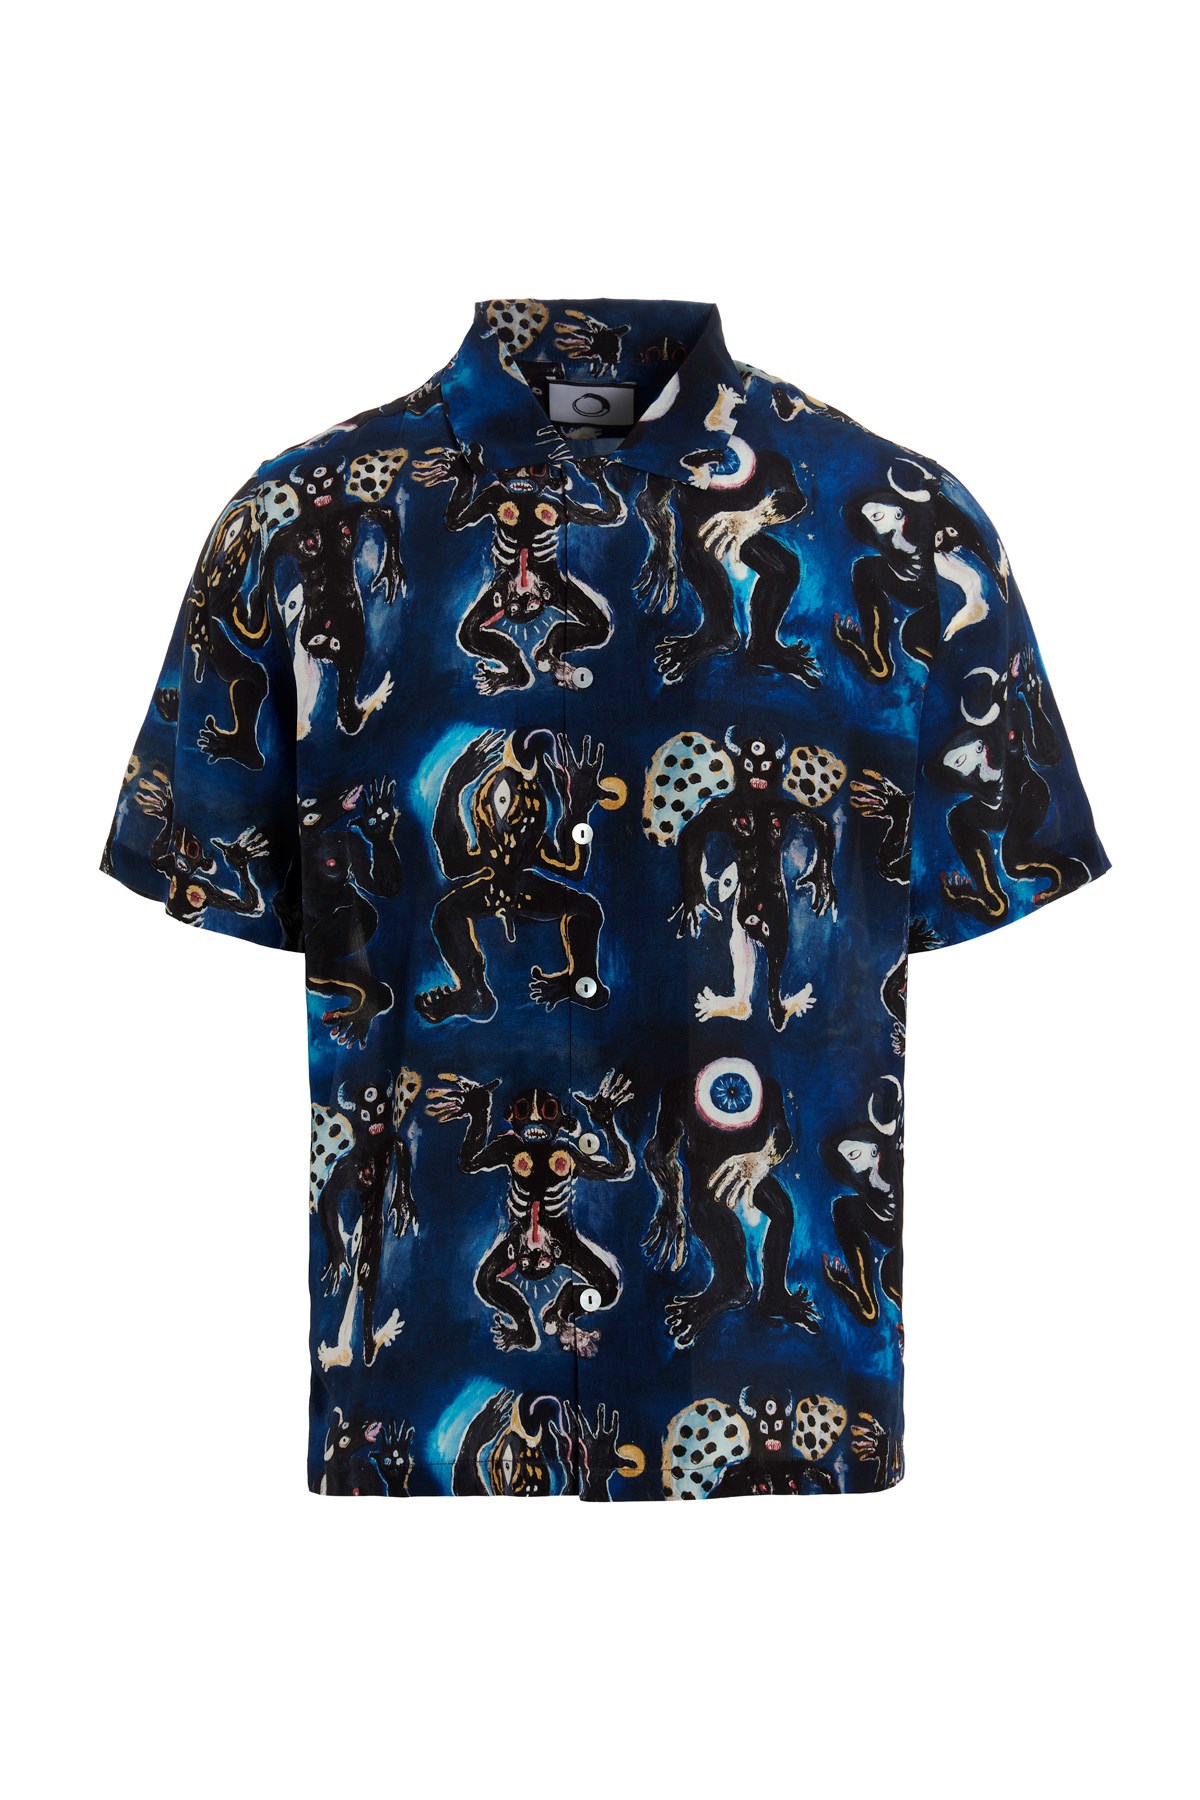 ENDLESS JOY 'Blue Totem’ Shirt